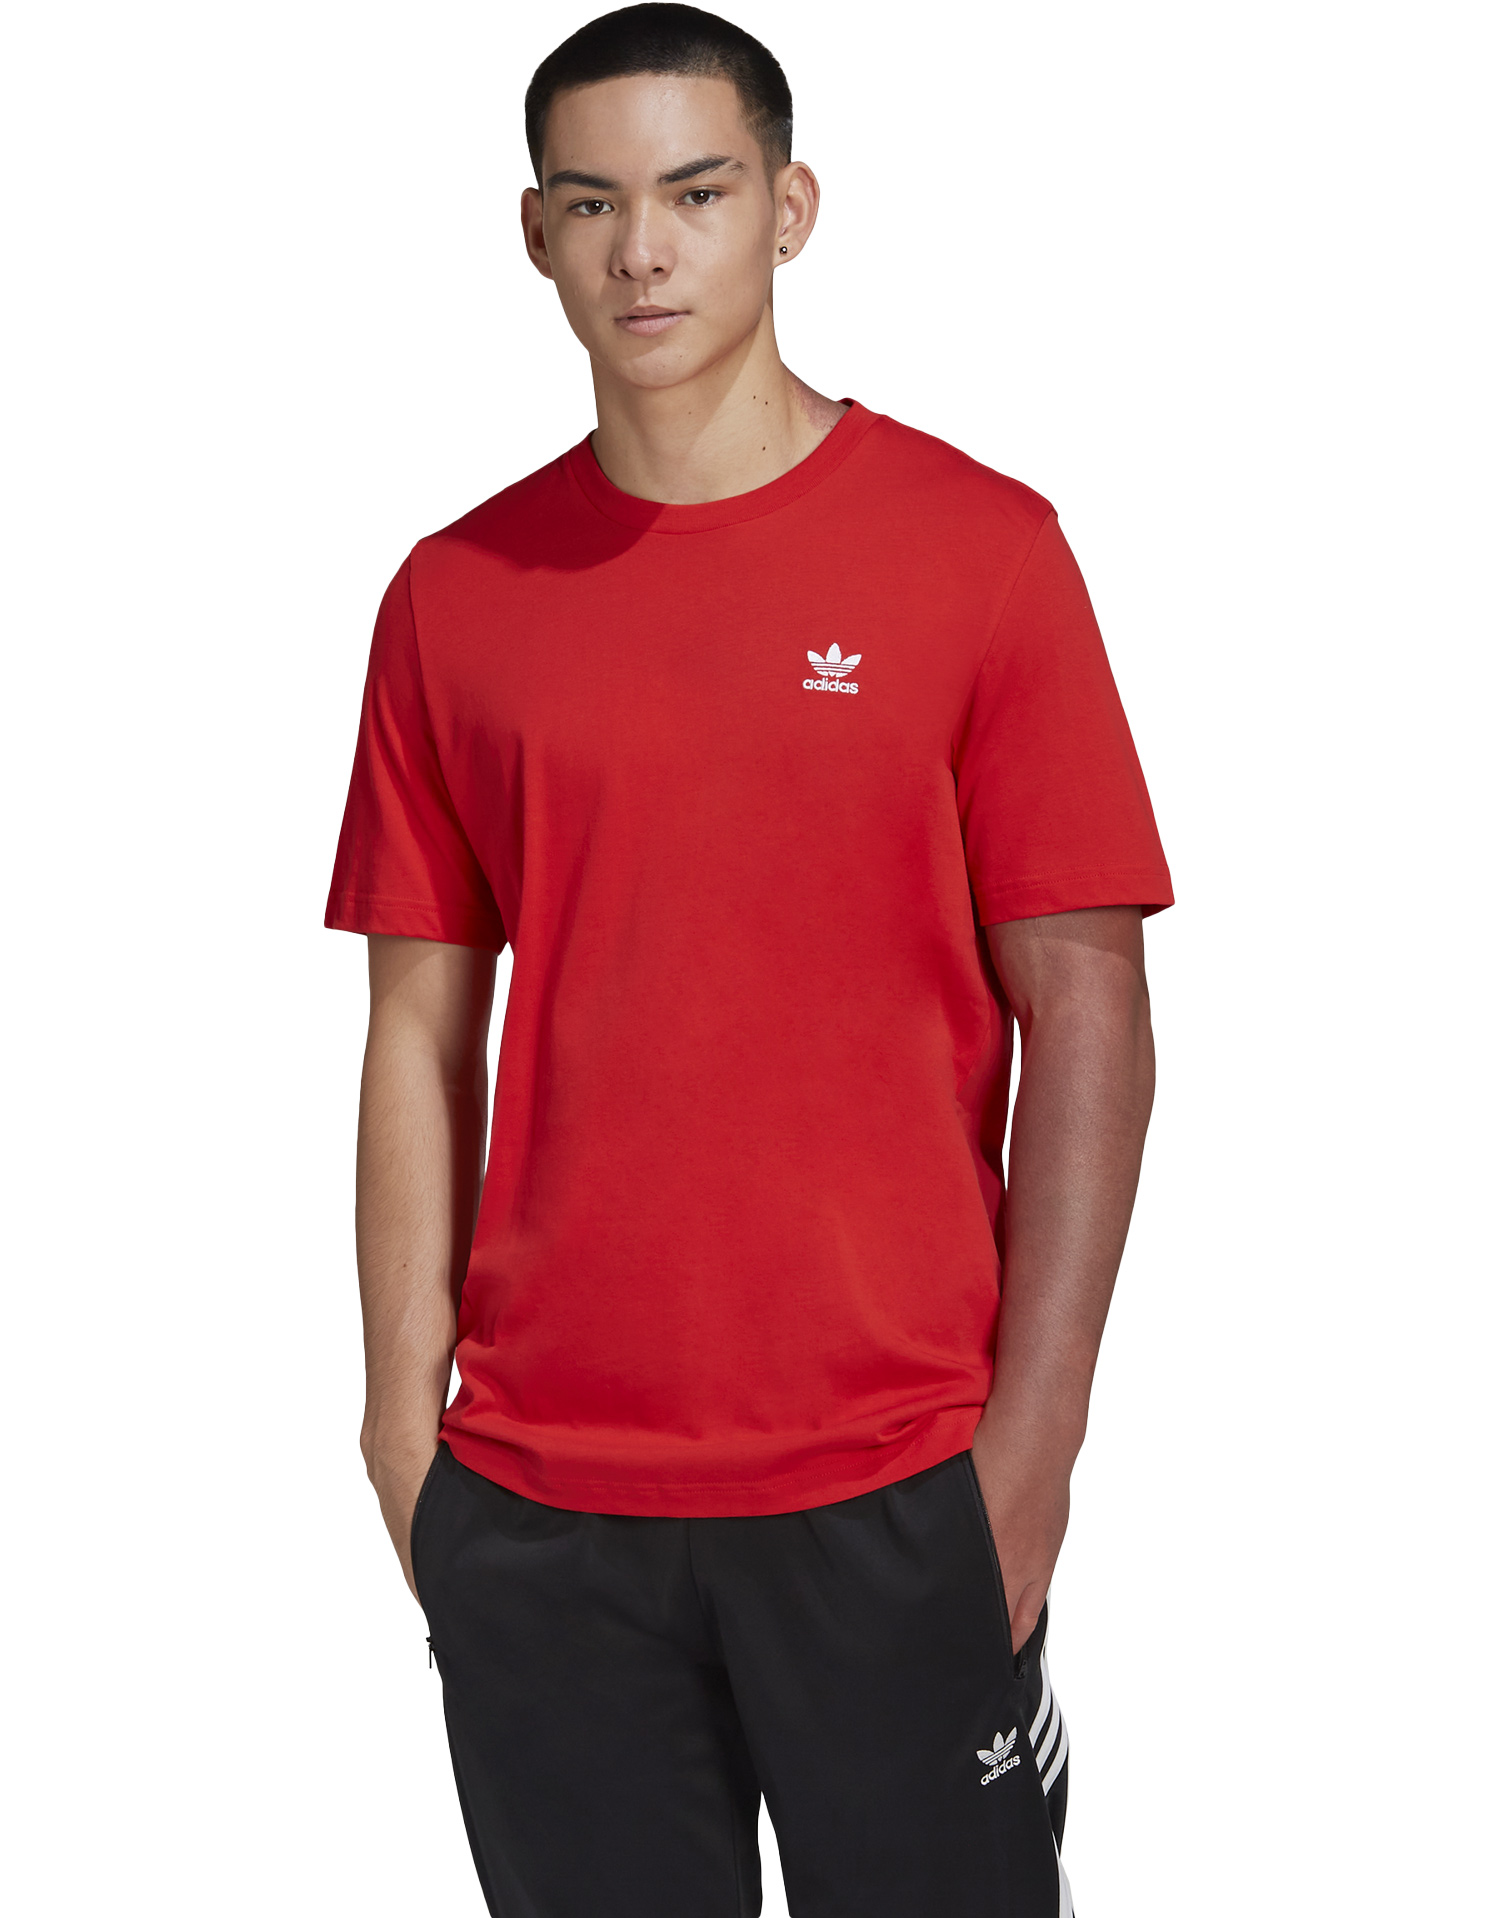 adidas-originals-trefoil-t-shirt-red-white